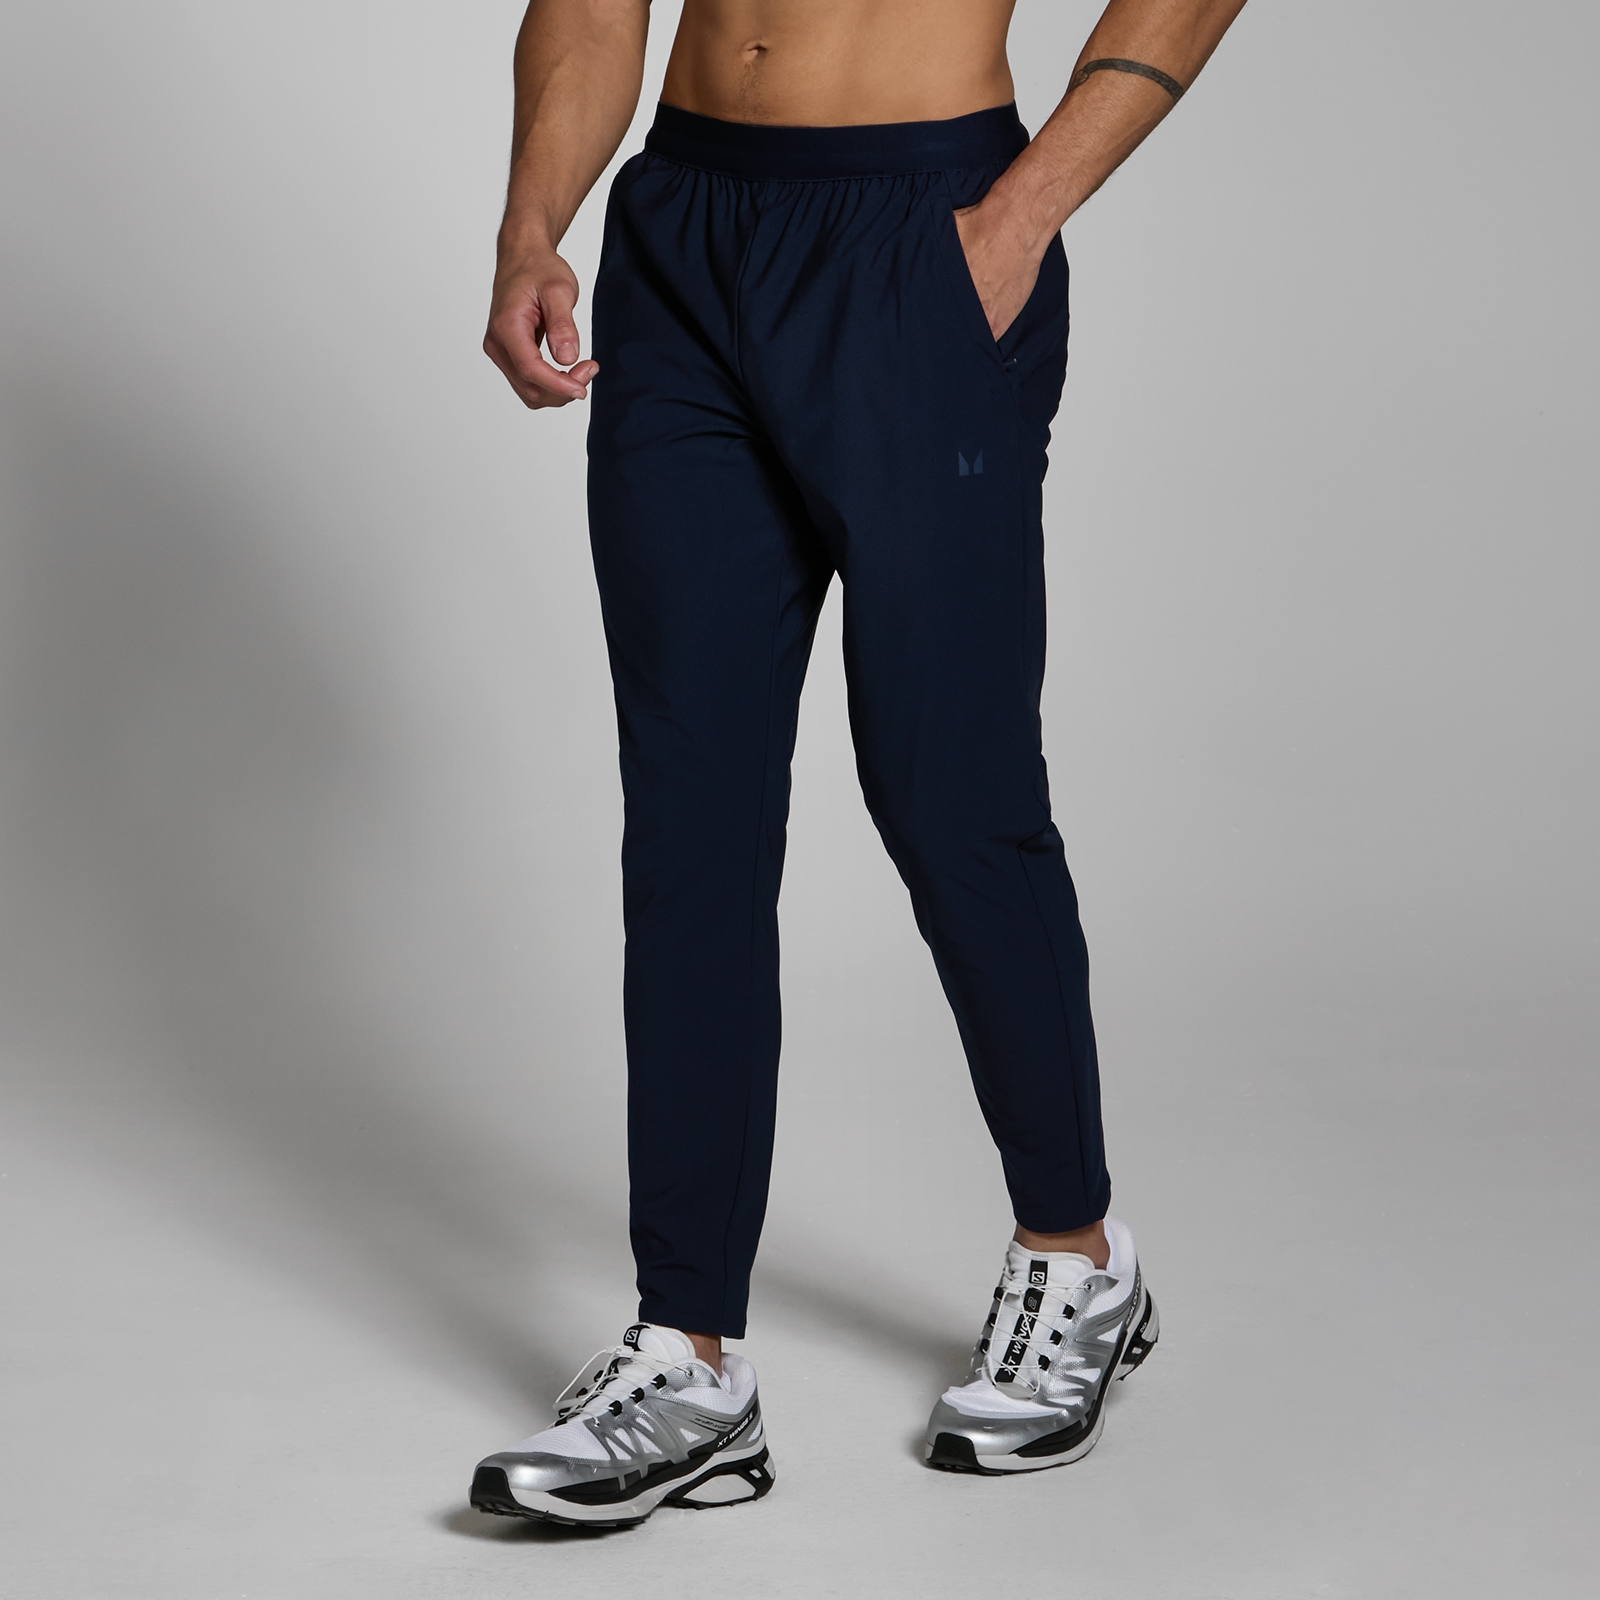 Image of Pantaloni da jogging in tessuto MP Lifestyle da uomo - Blu navy scuro - XXXL